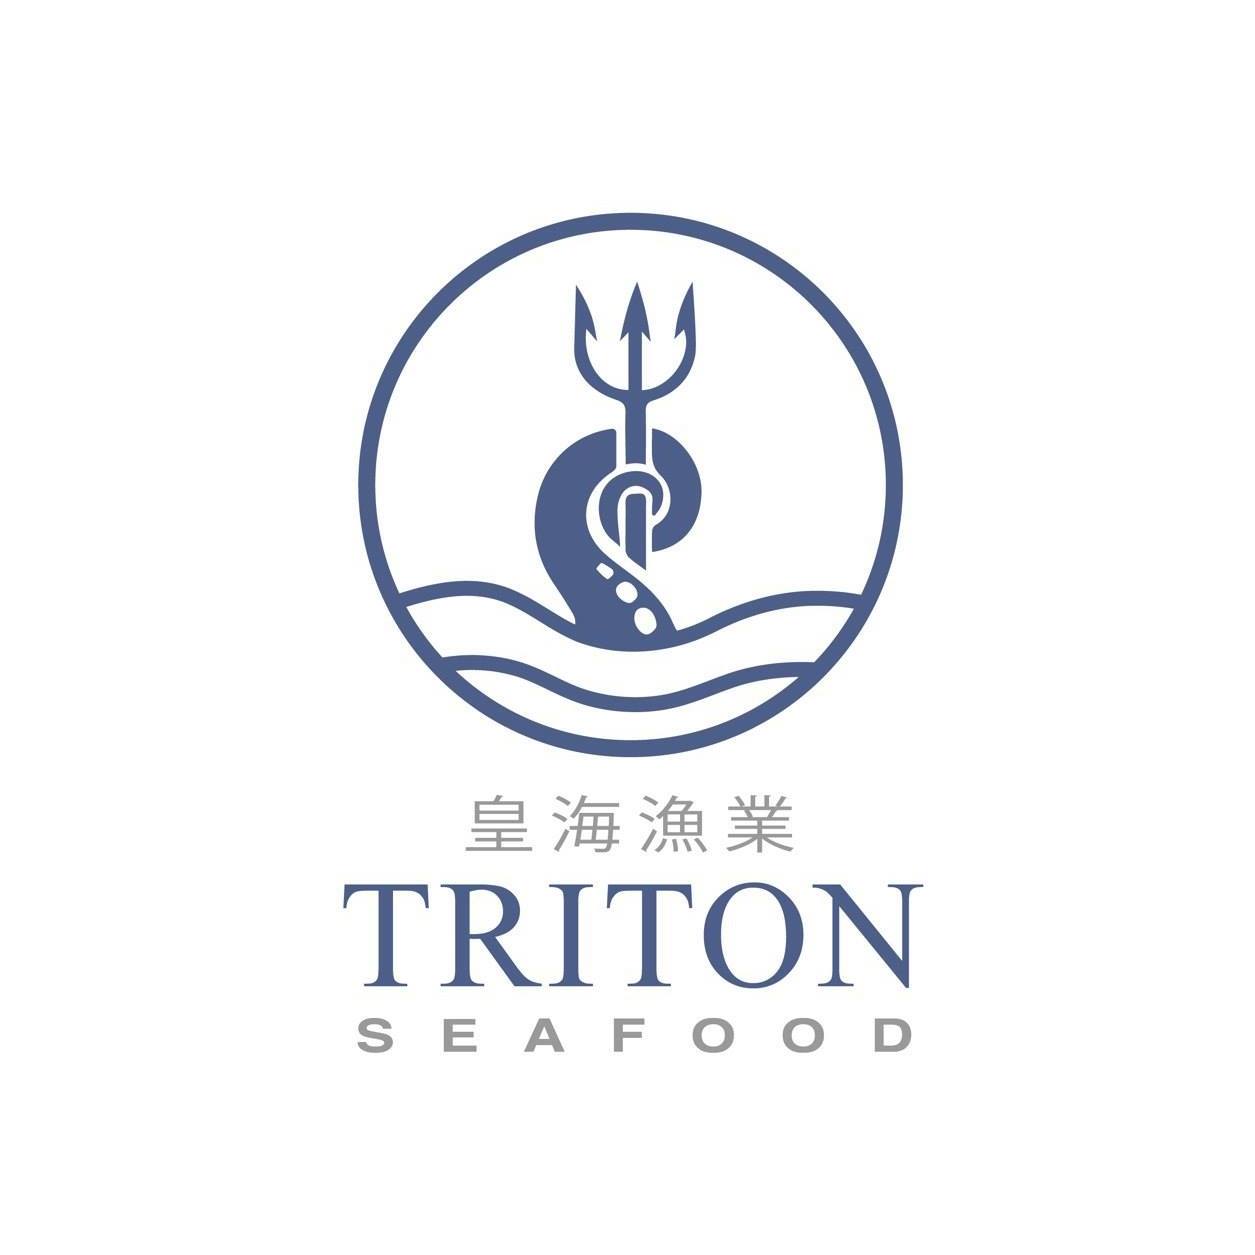 triton seafood market logo